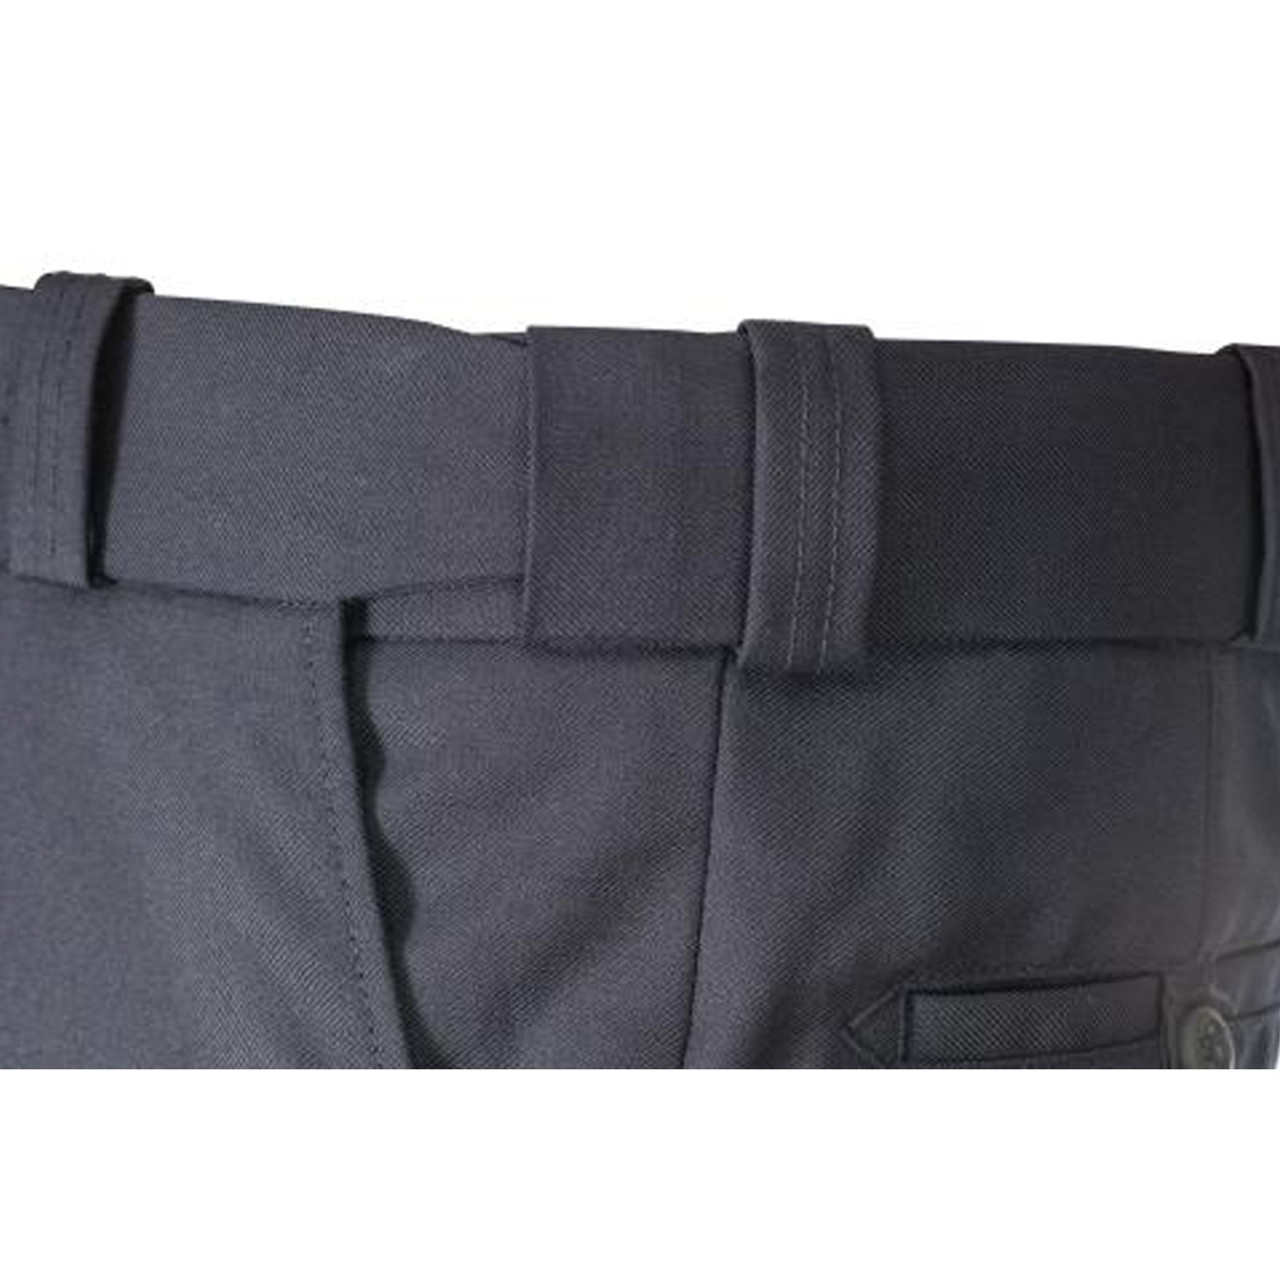 Spiewak SPDU27-WMN Poly Wool Internal Women's Cargo Duty Trousers, Uniform, Strechable Waist, available in Dark Navy Blue, Black, and Brown